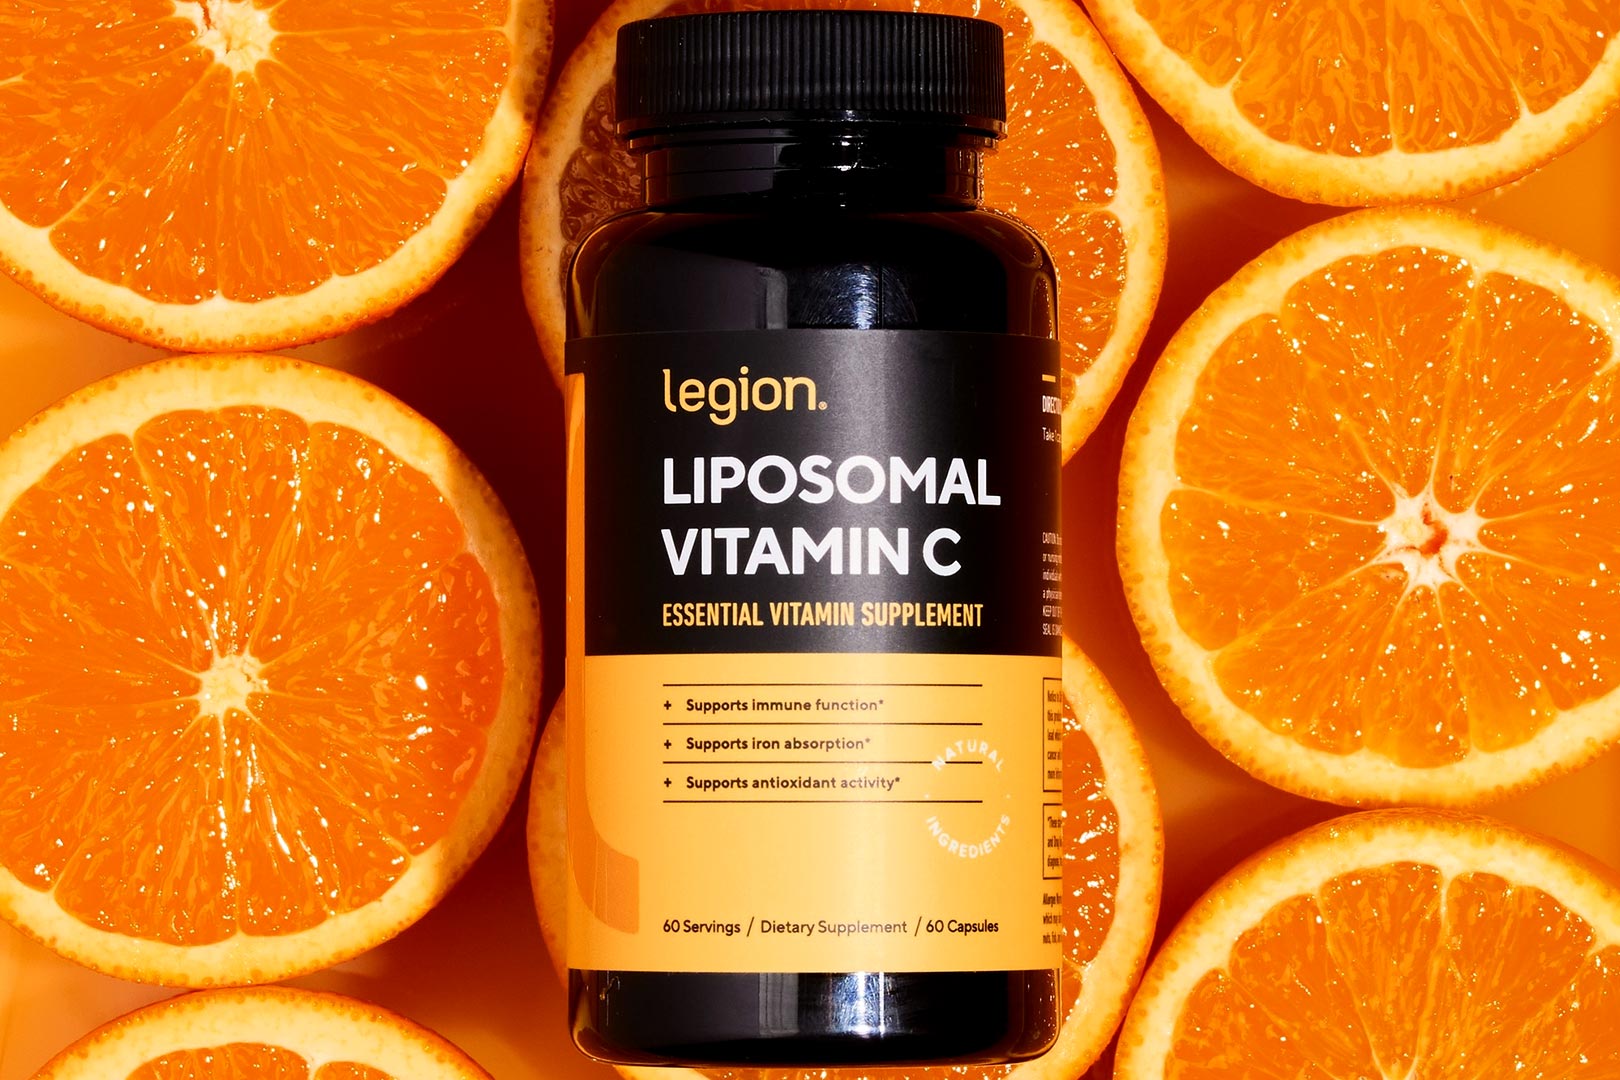 Legion Liposomal Vitamin C